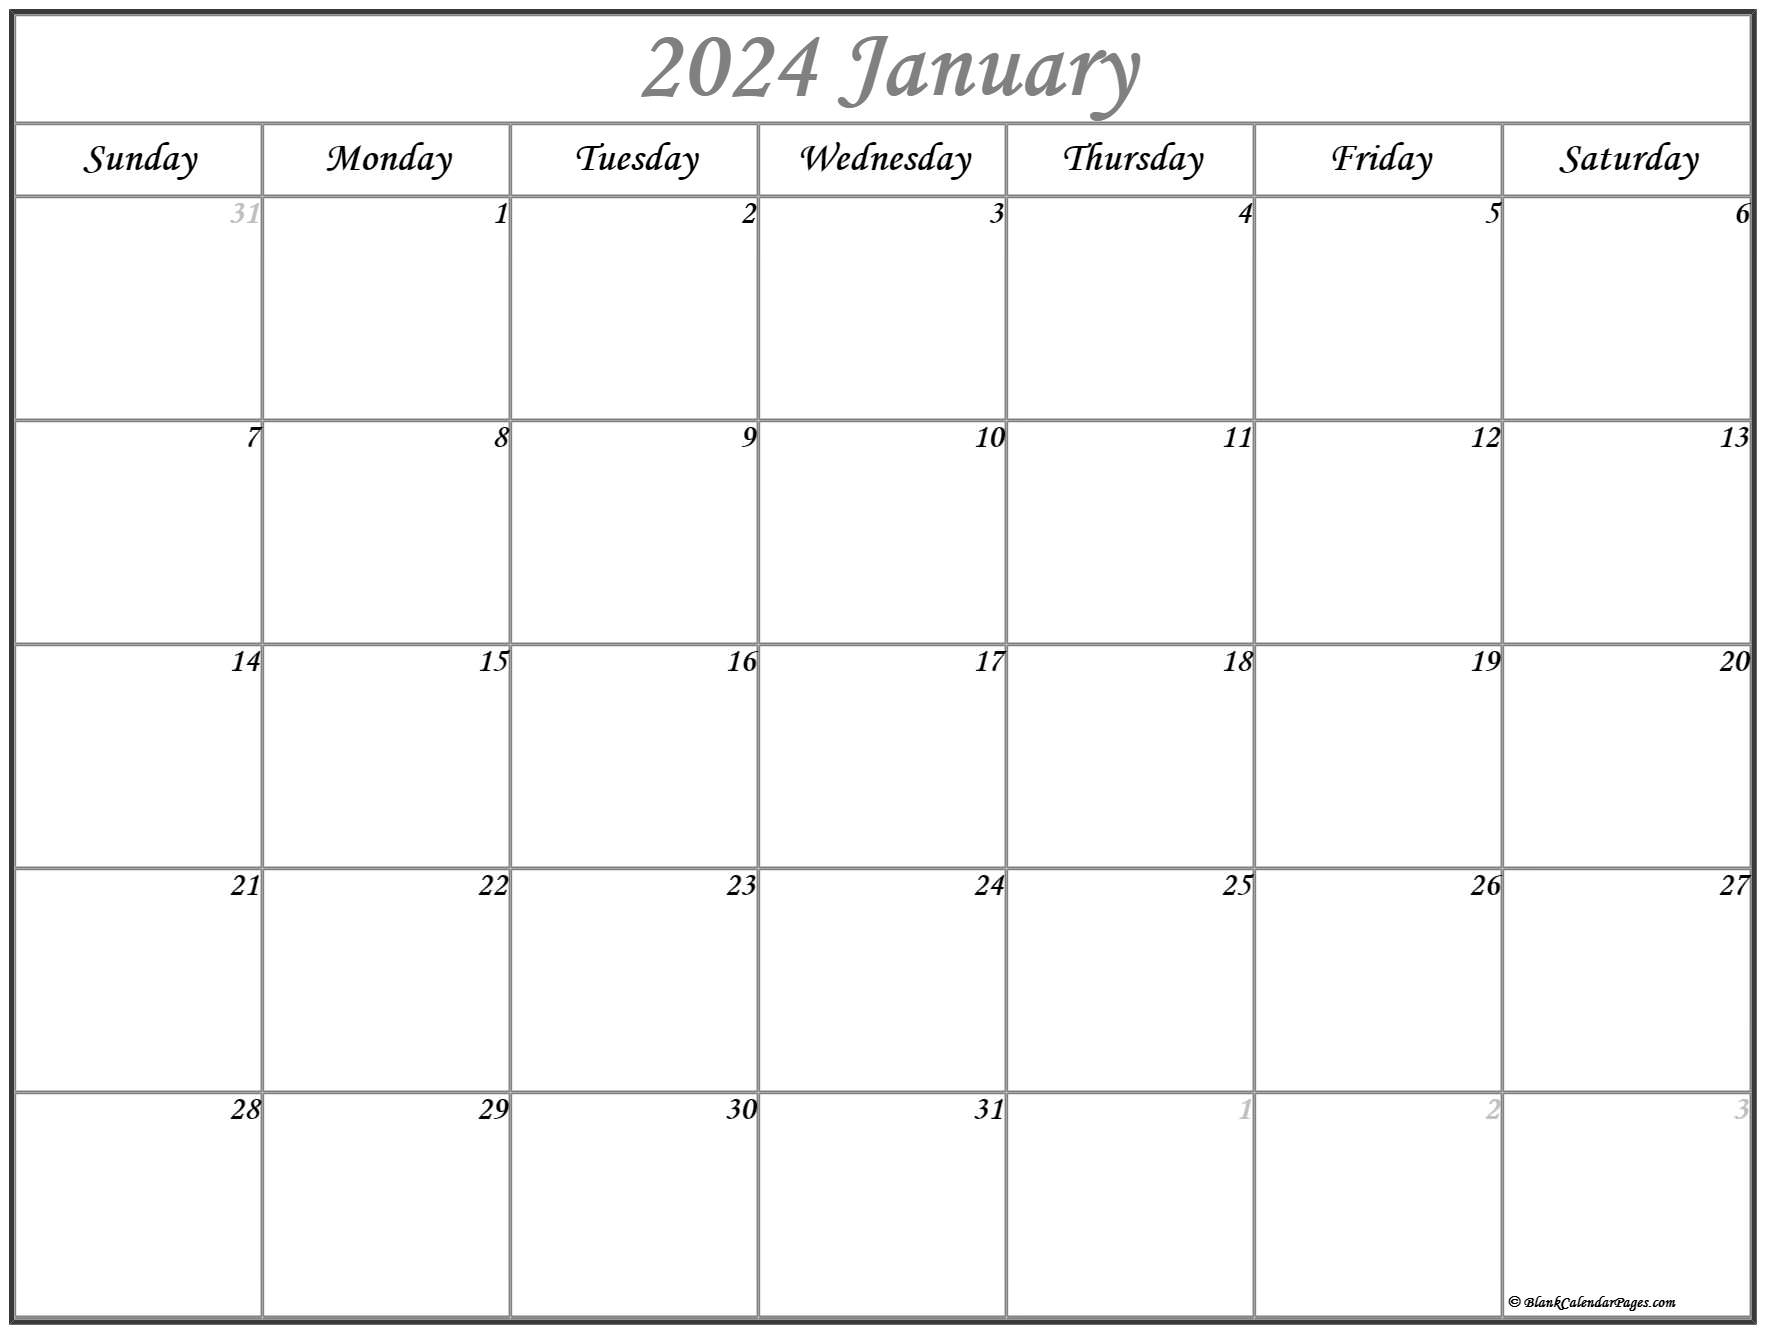 January 2024 Calendar Free Printable Calendar January 2024 Calendar - Free Printable 2024 Calendar January